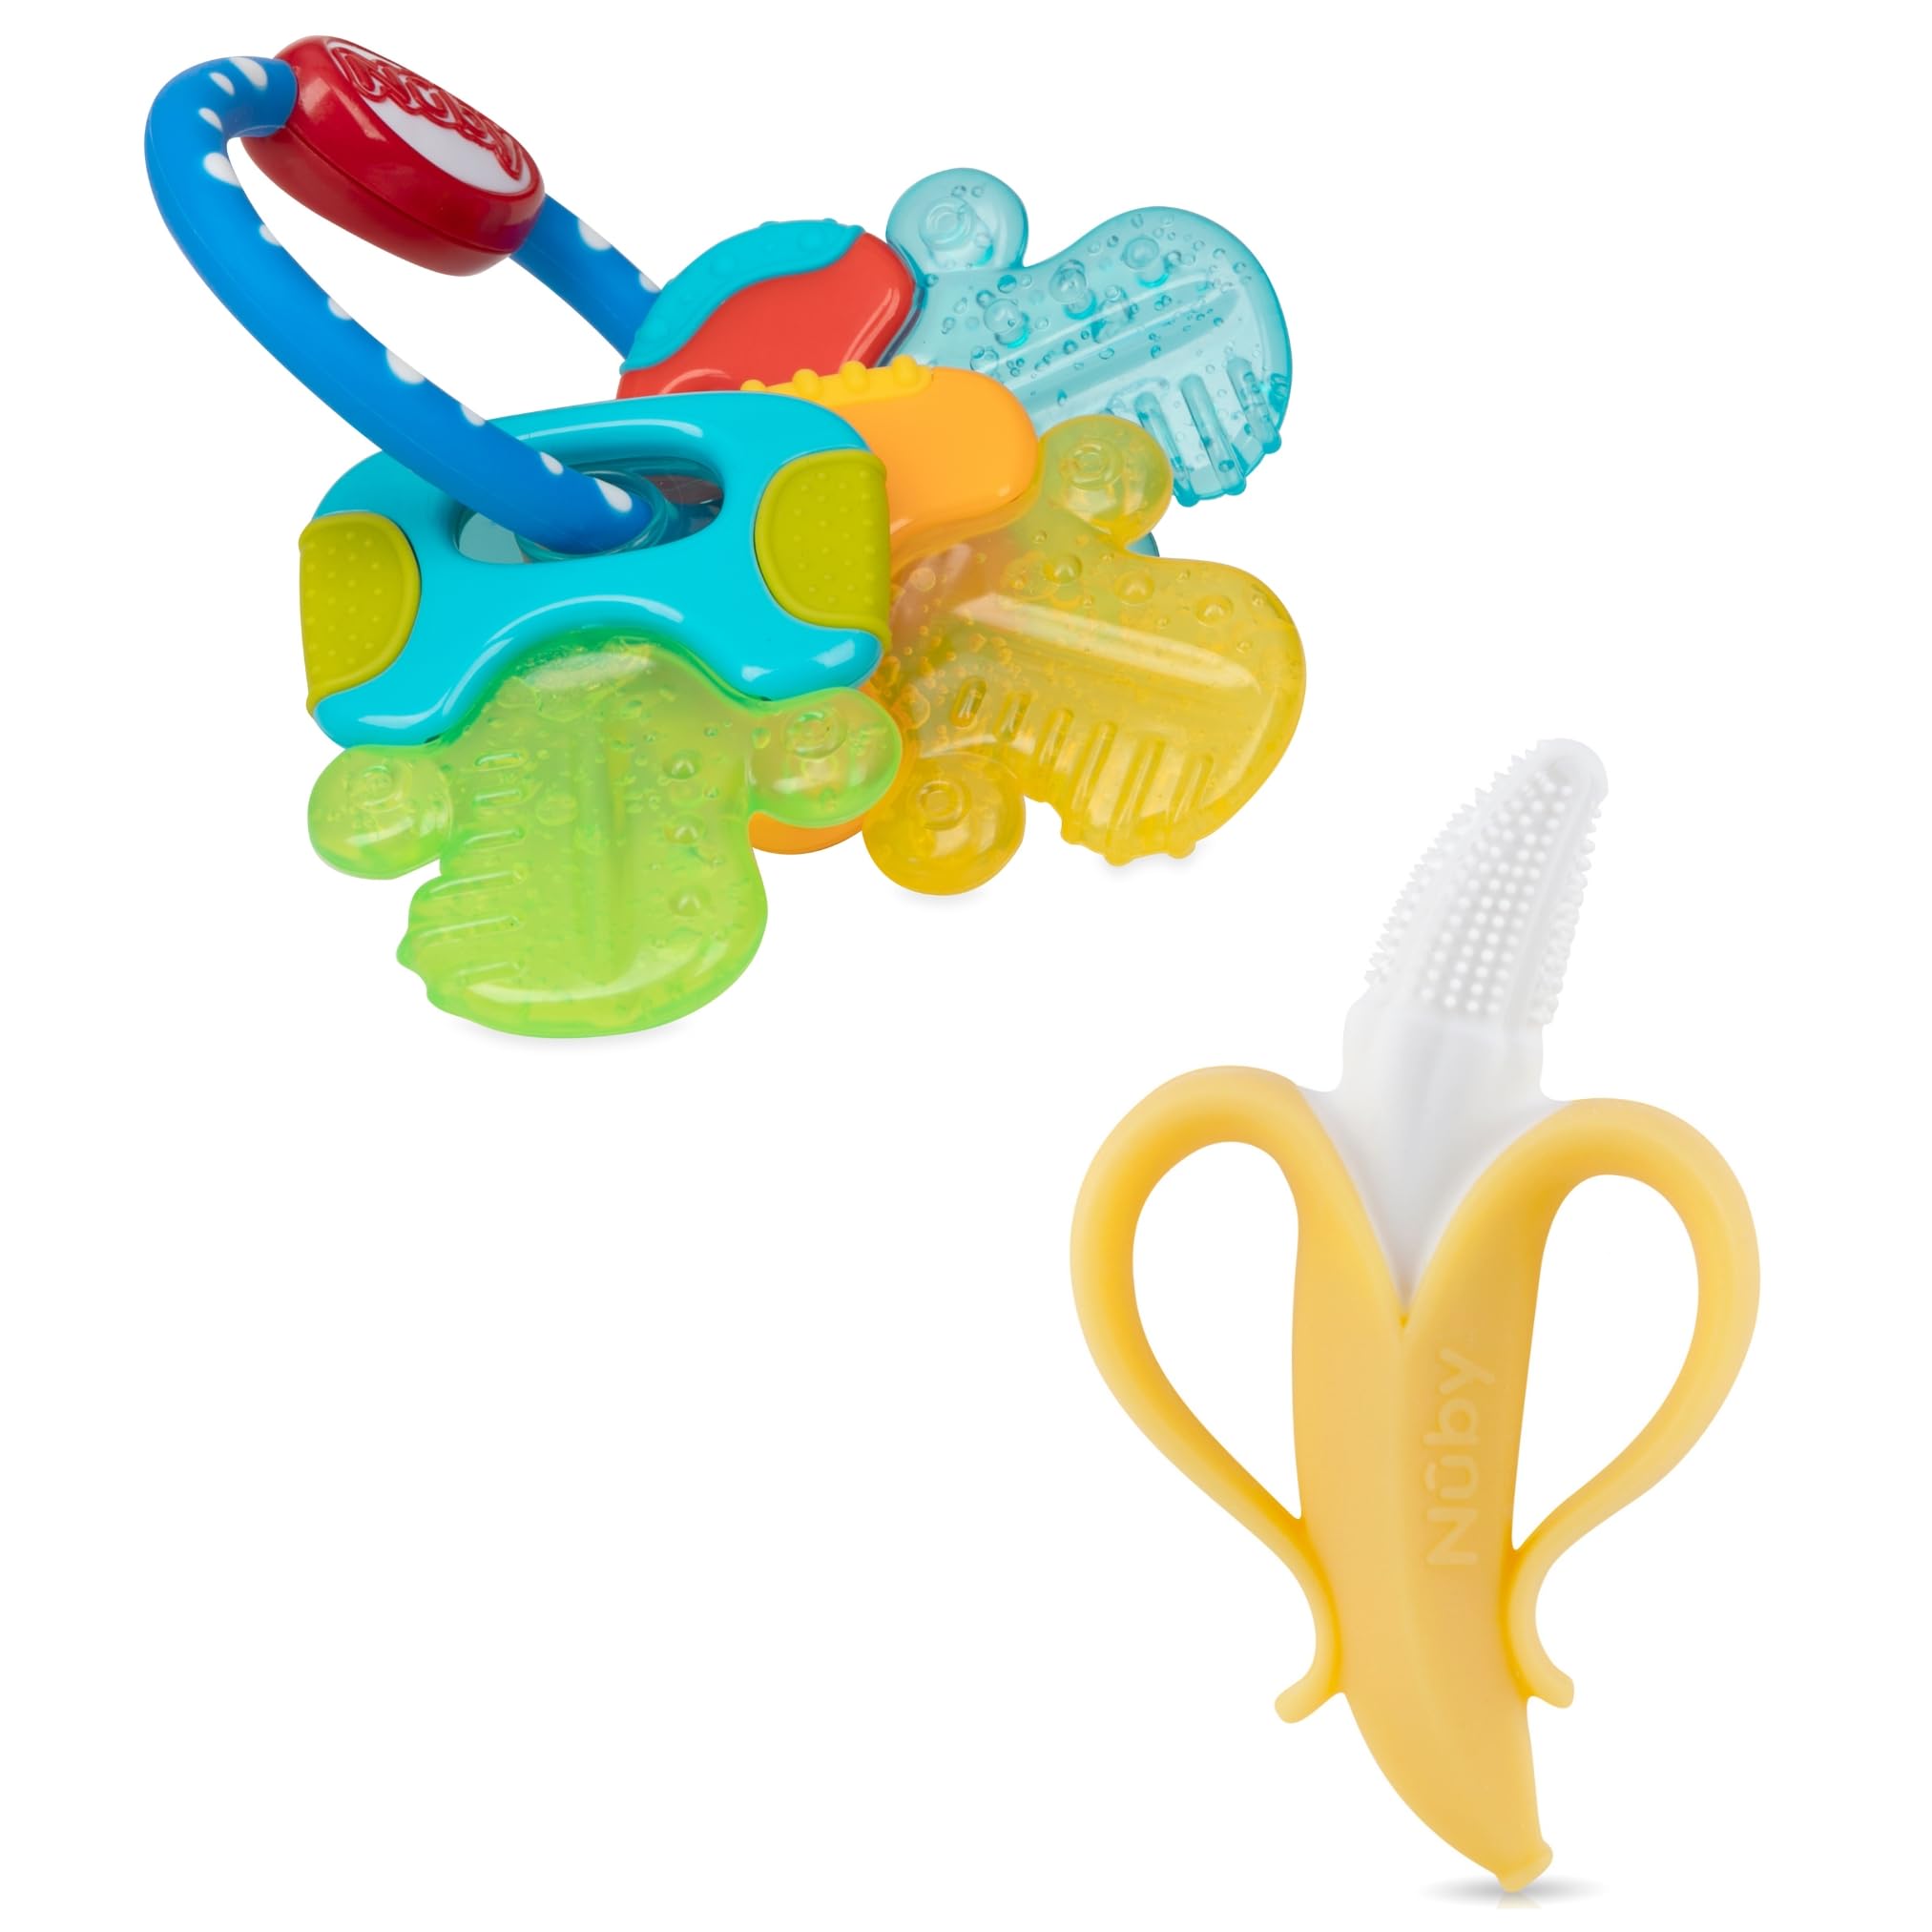 Nuby Ice Gel Teether Keys & Nananubs Banana Massaging Toothbrush, Yellow